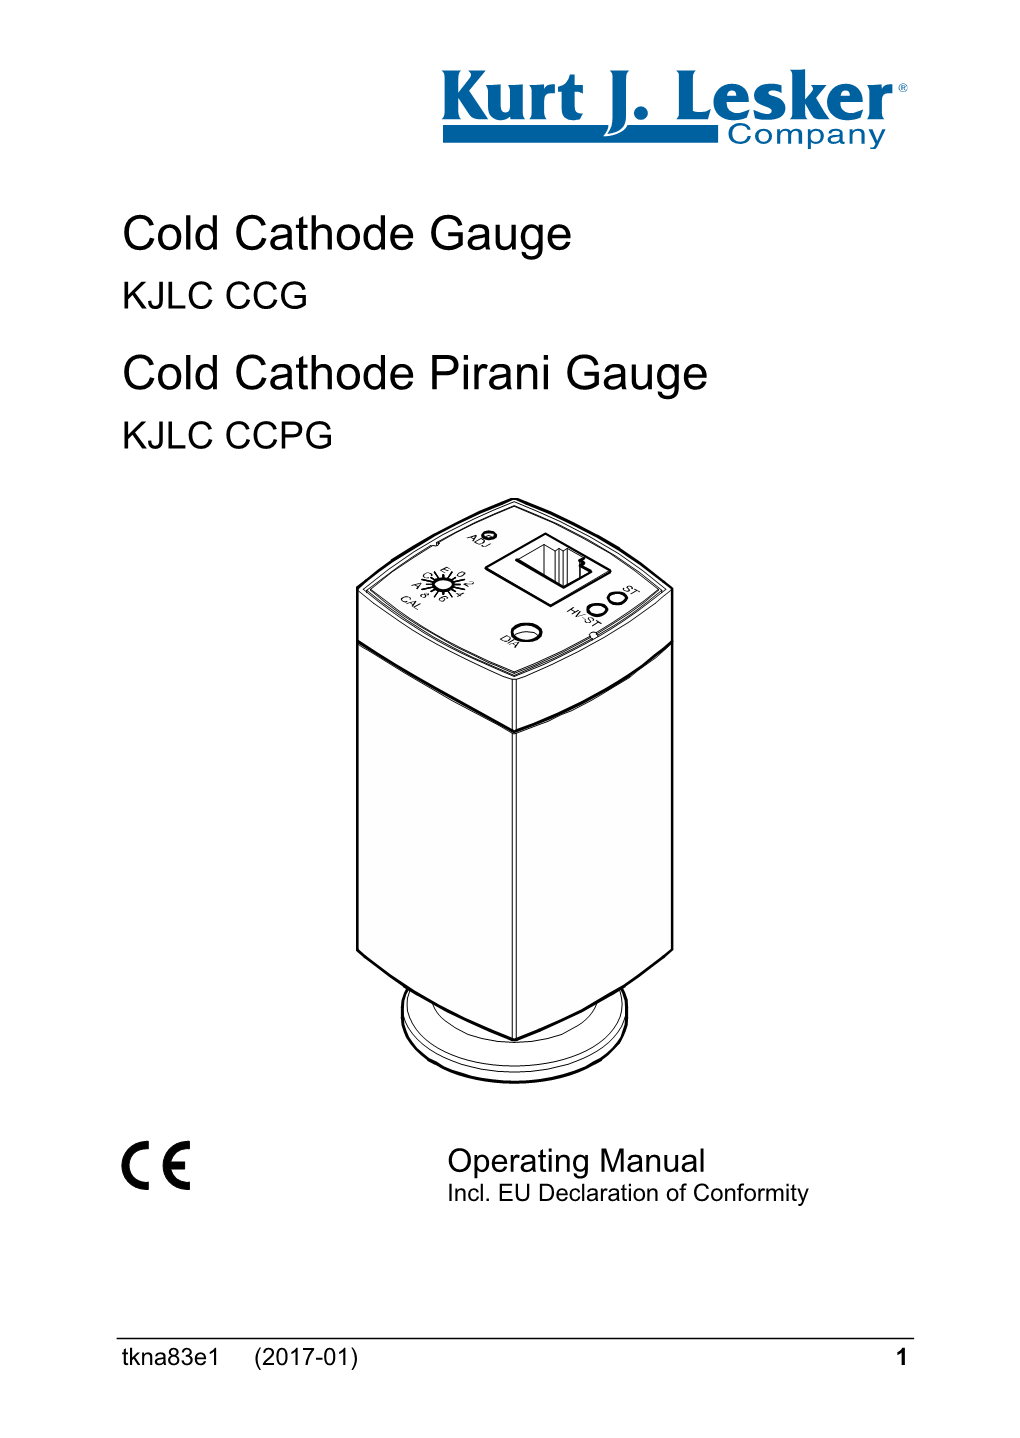 Cold Cathode Gauge Cold Cathode Pirani Gauge